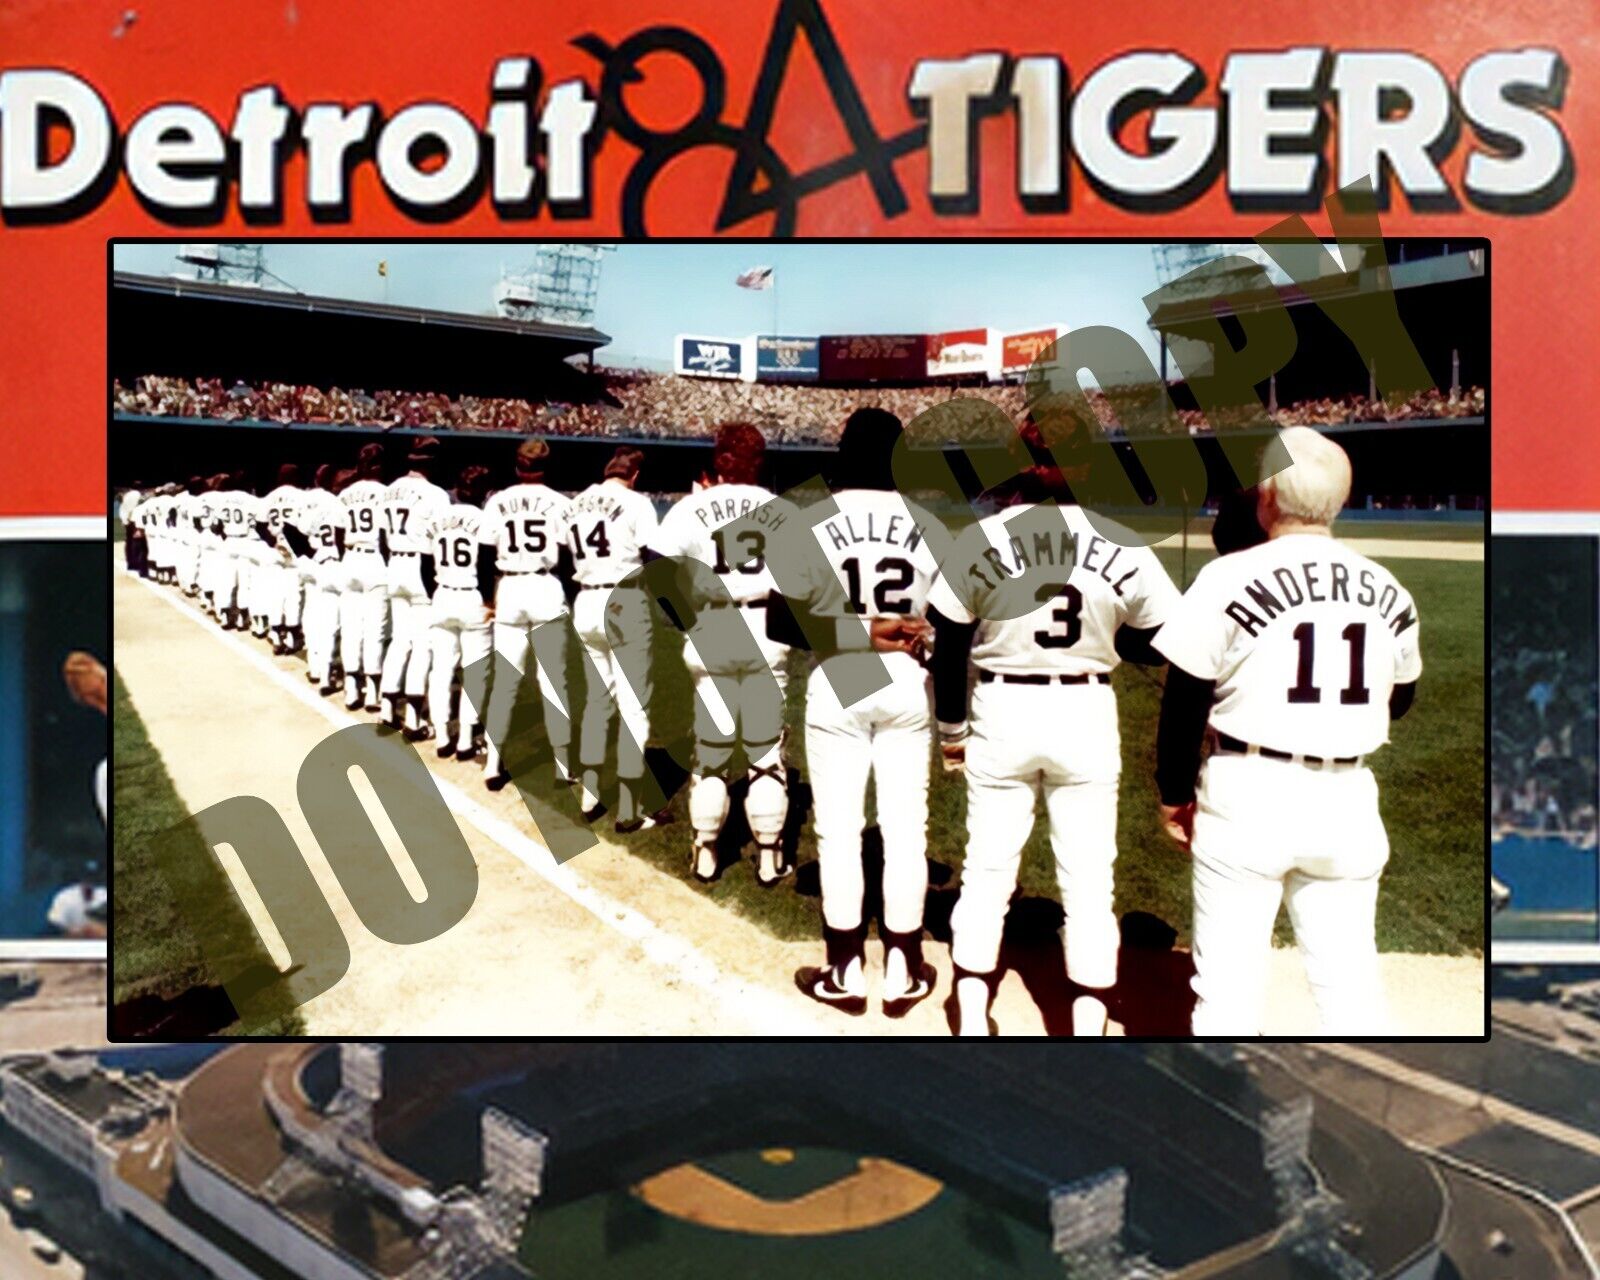 1984 Detroit Tigers Stadium Opening Day Line Up Program Collage Art 8x10 Photo